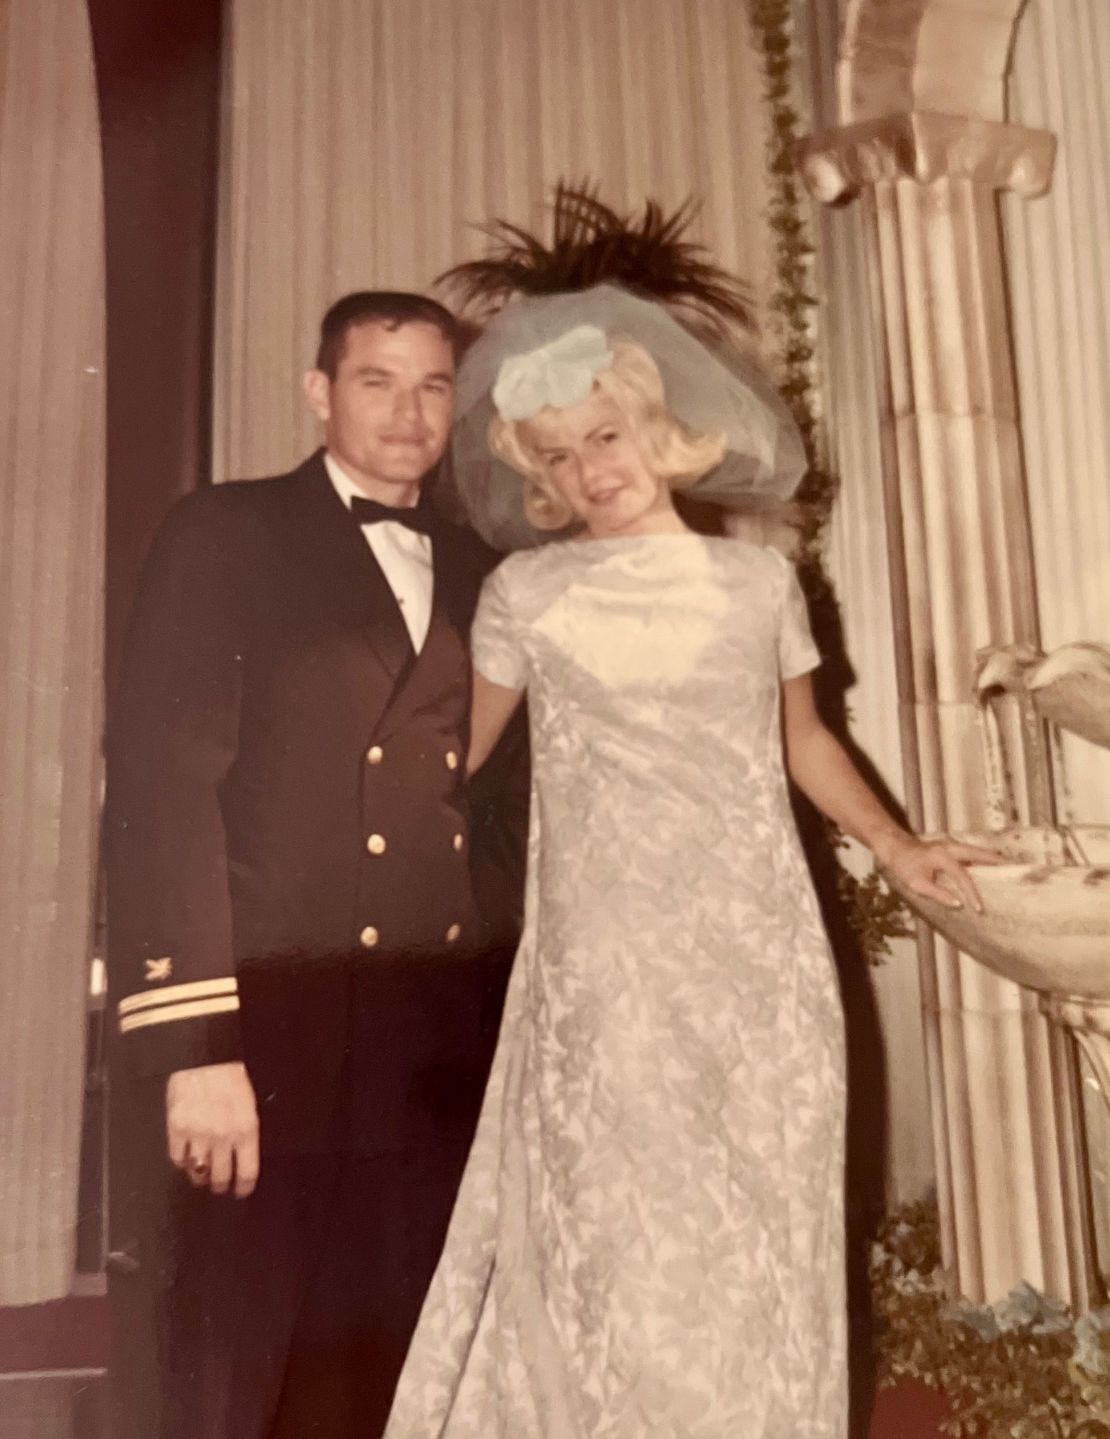 Faye and Tom Bauman on their wedding day 57 years ago. "We had a wonderful life," she says.